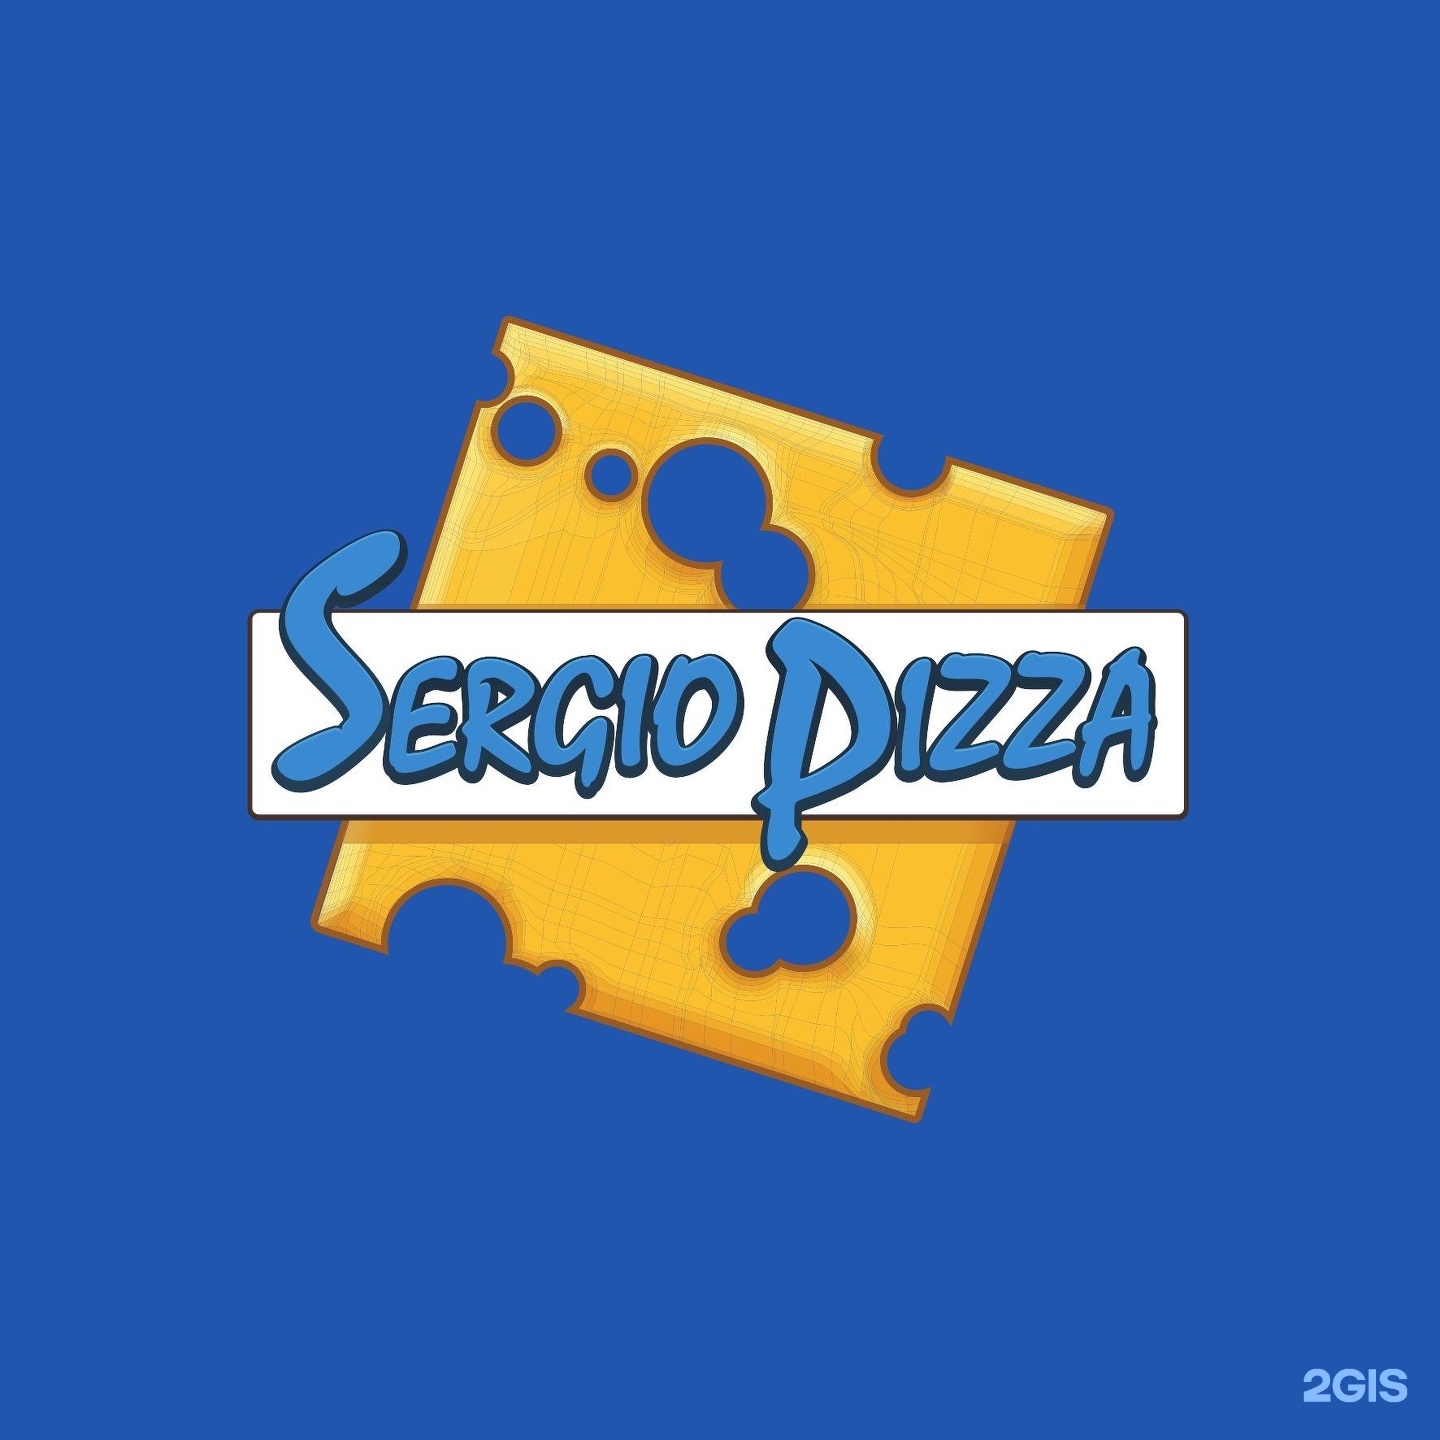 Сержио пицца г. Серджио пицца. Серджио пицца лого. Сержио пицца г.Зеленоград. Сержио пицца Мытищи.